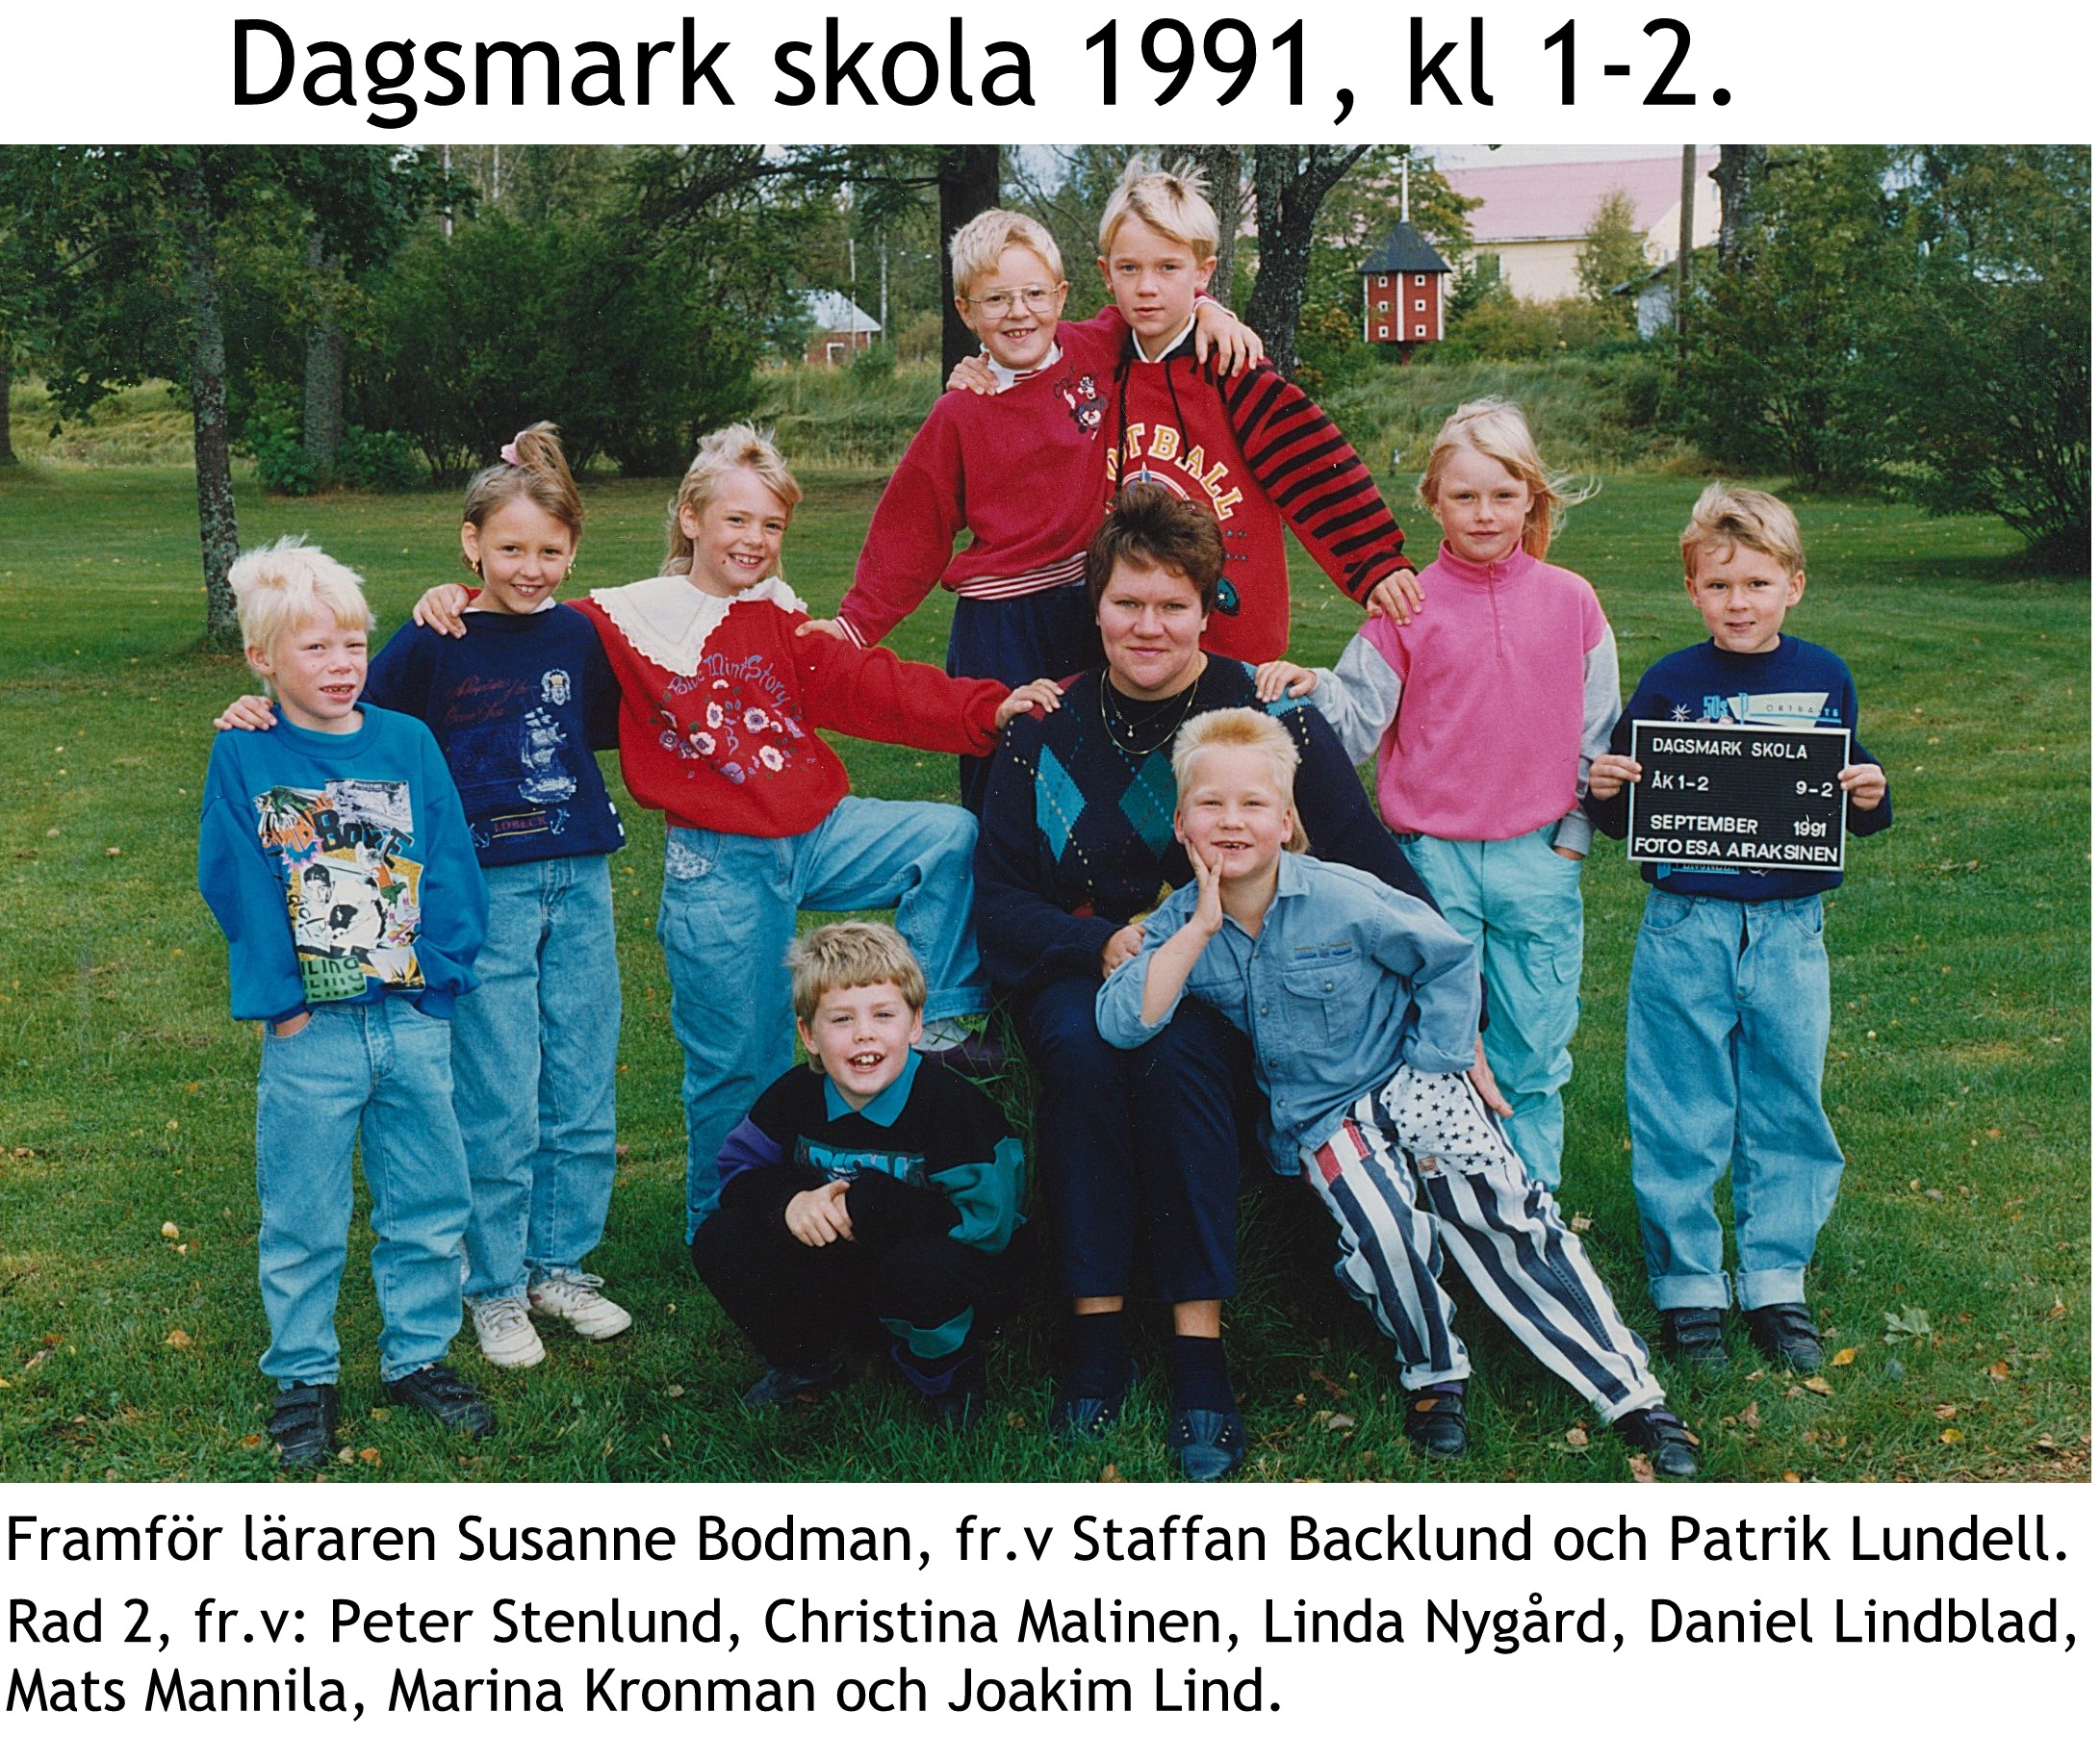 1991 Dagsmark skola kl 1-2